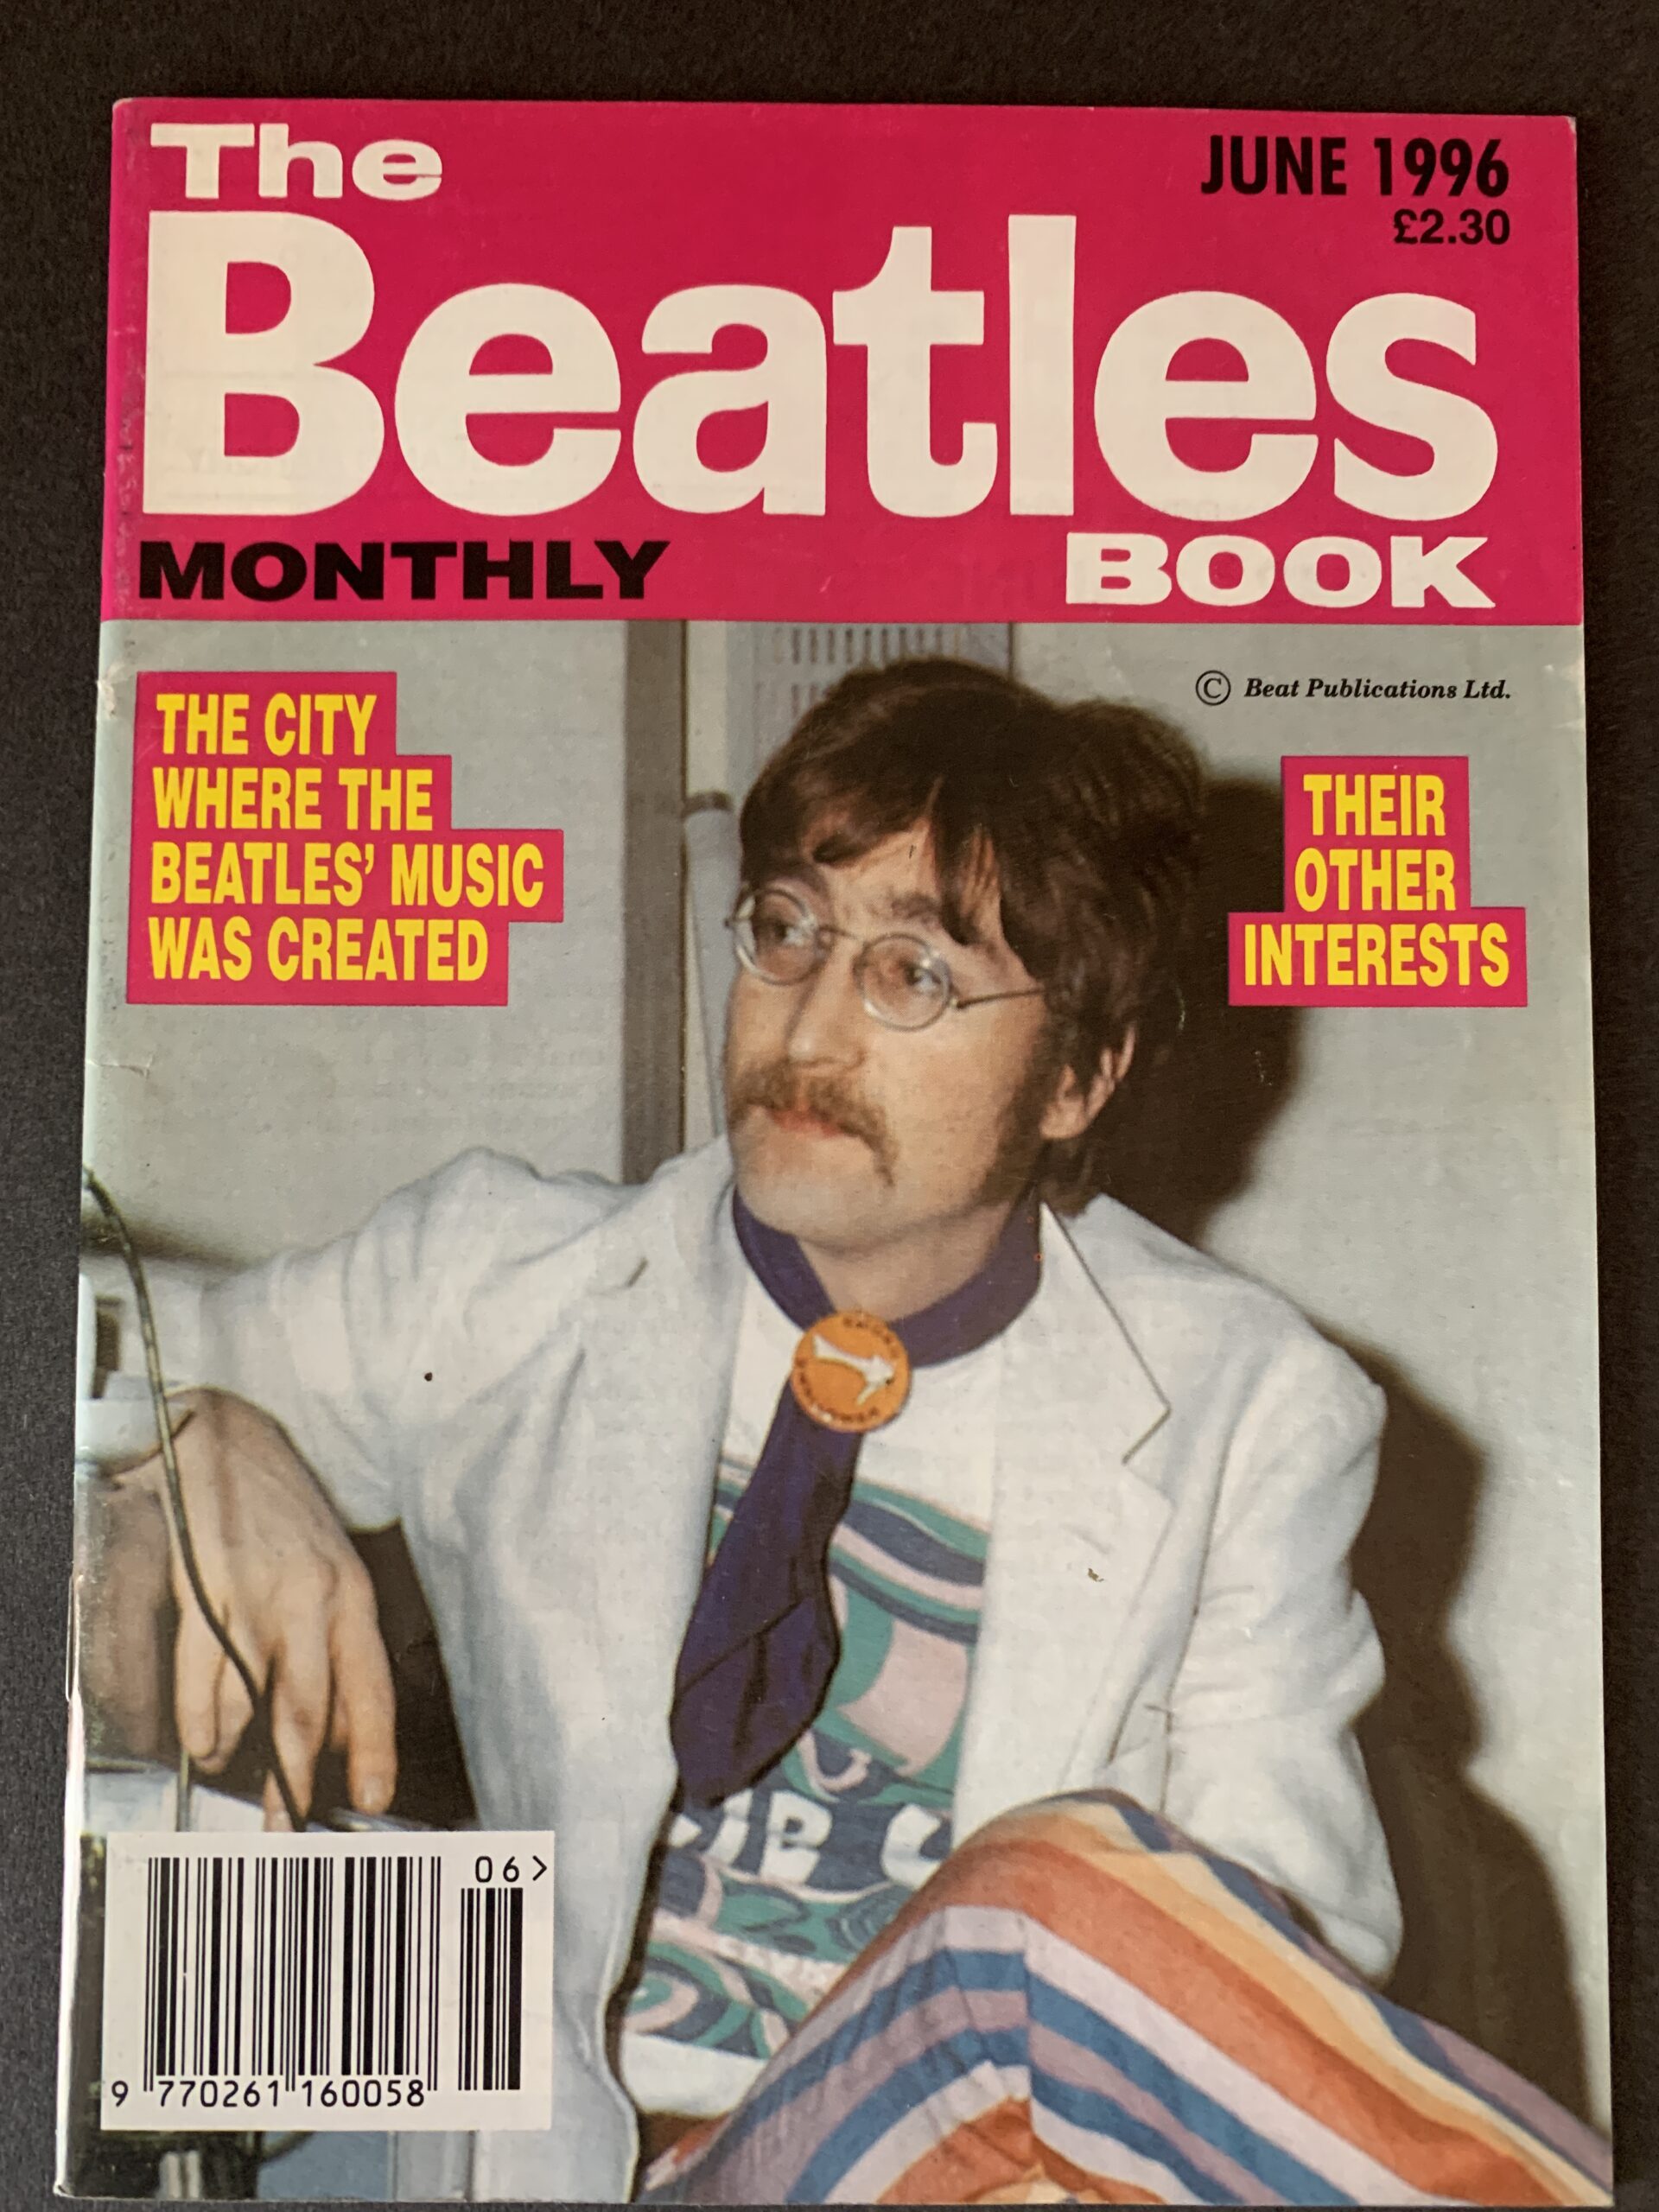 The Beatles Monthly (magazine)